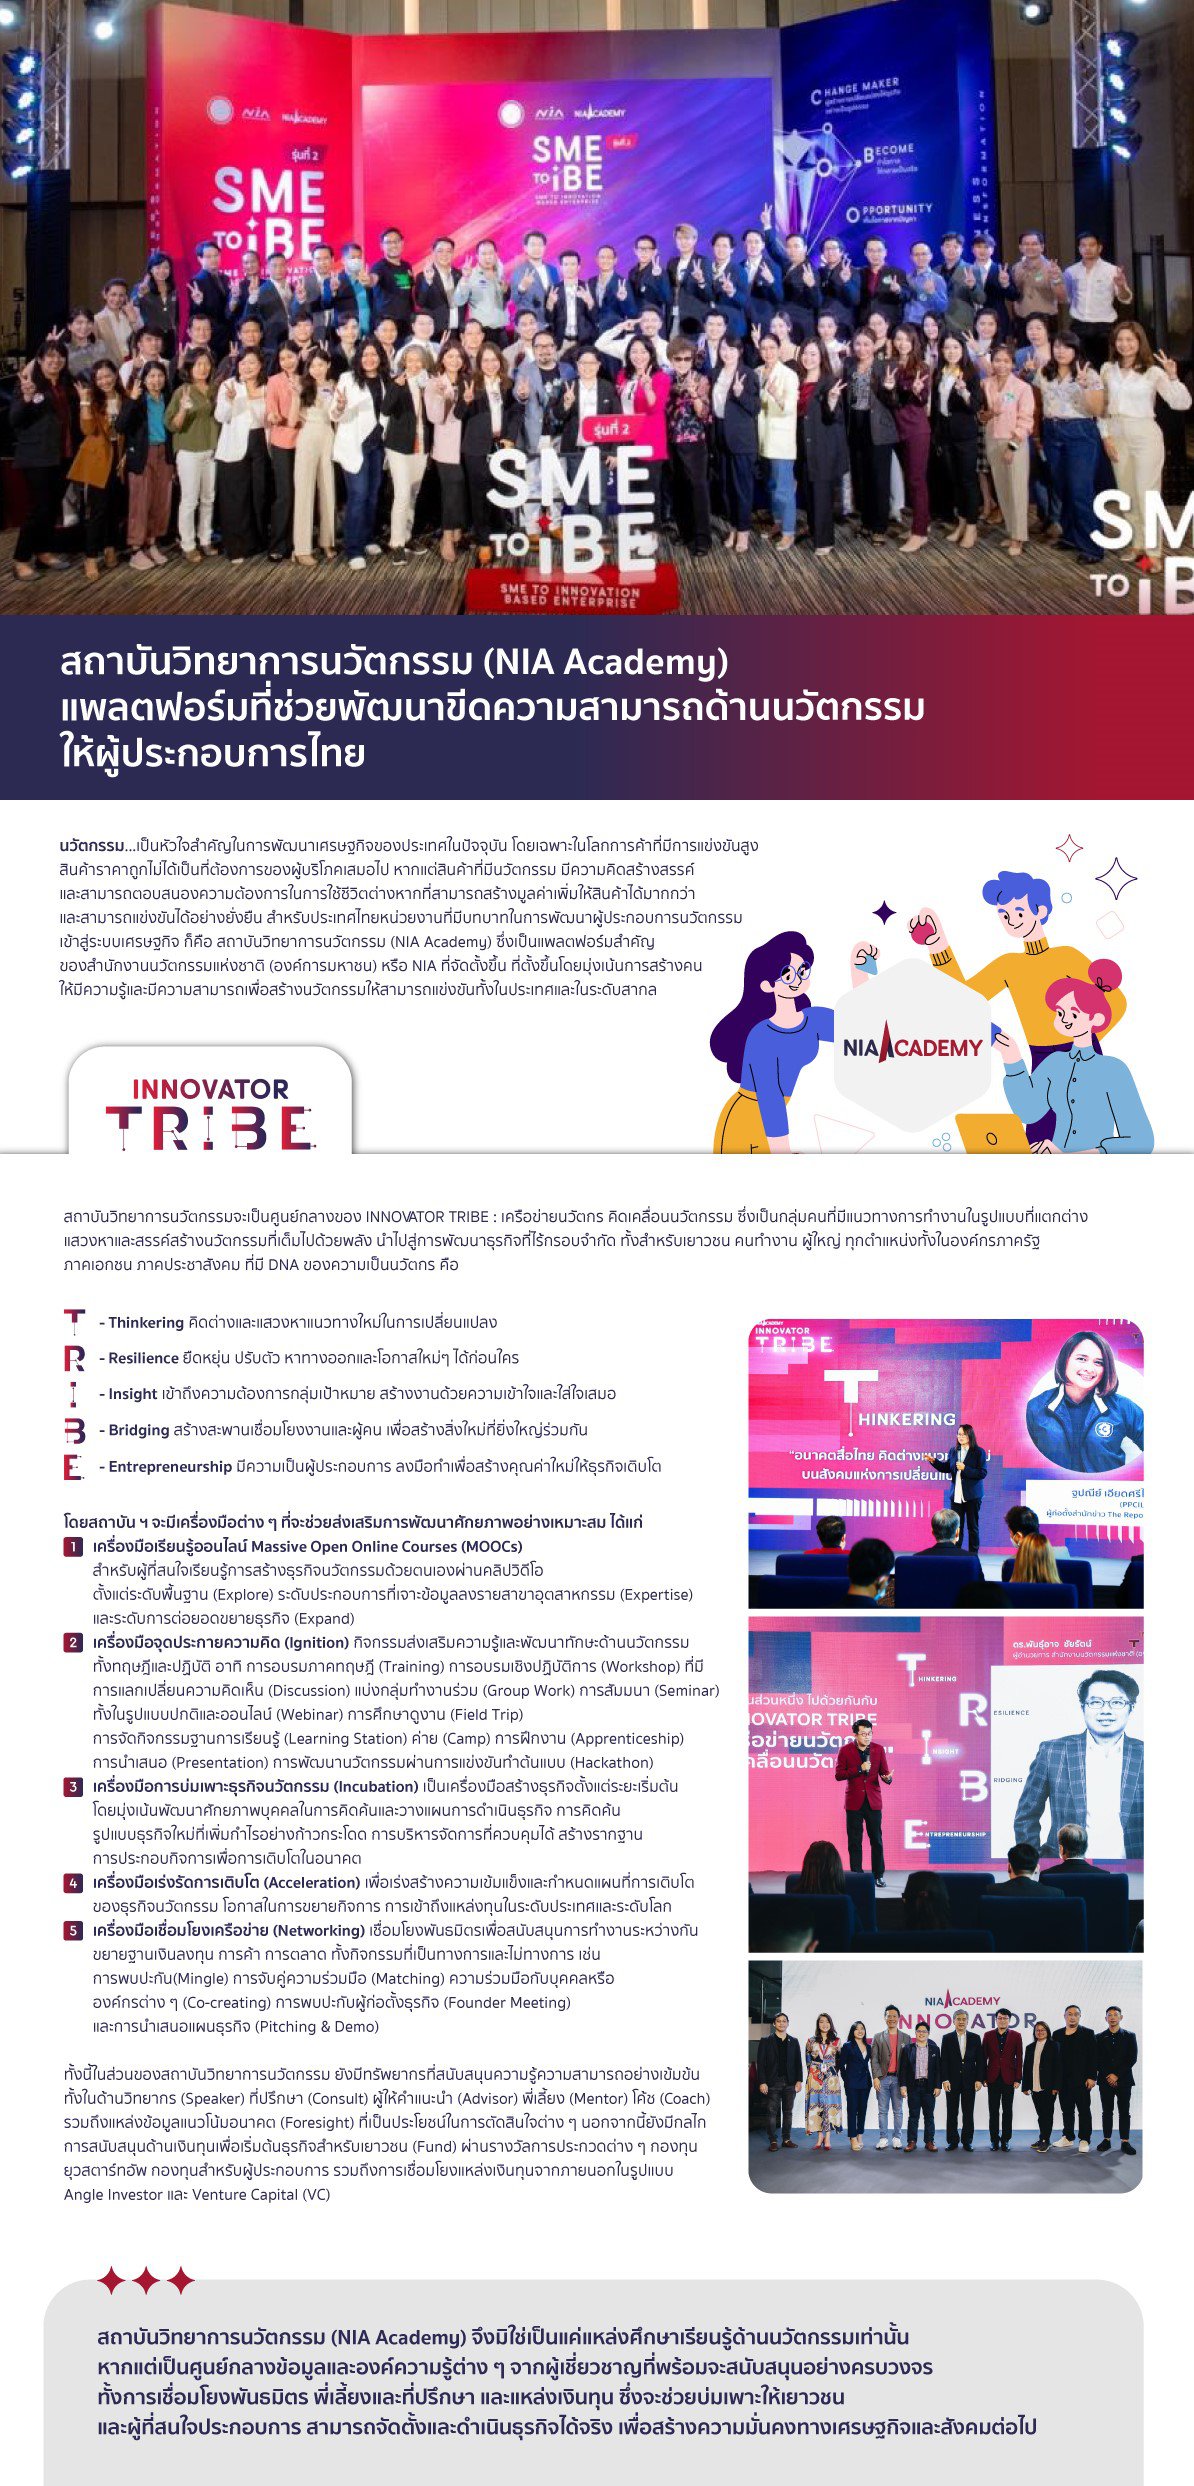 NIA Academy A platform that helps develop innovation capabilities for Thai entrepreneurs